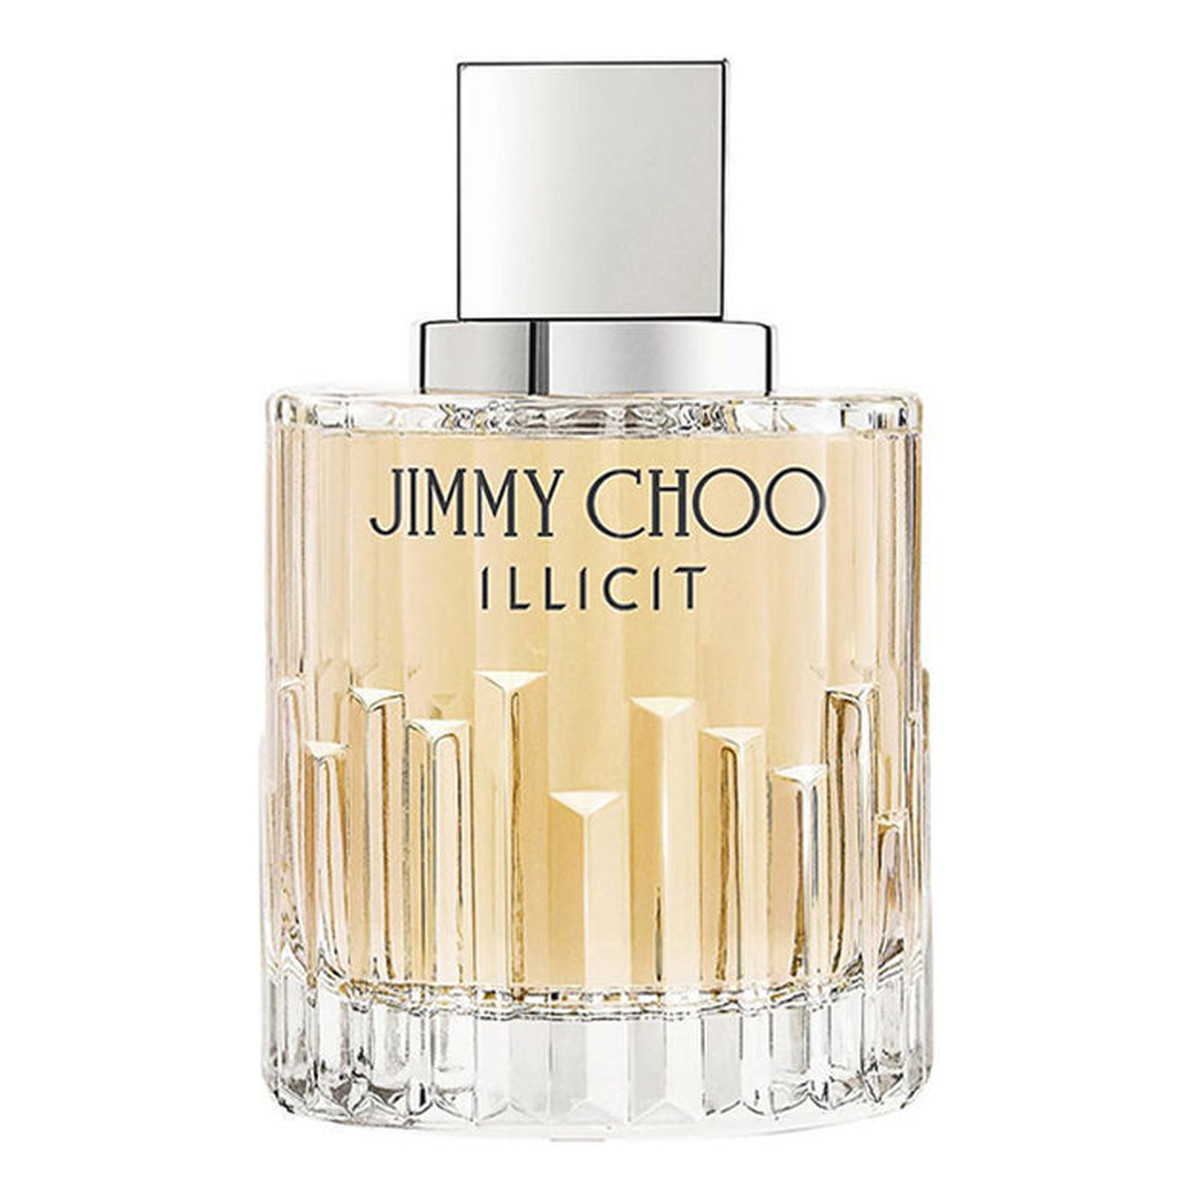 Jimmy Choo Illicit woda perfumowana 60ml